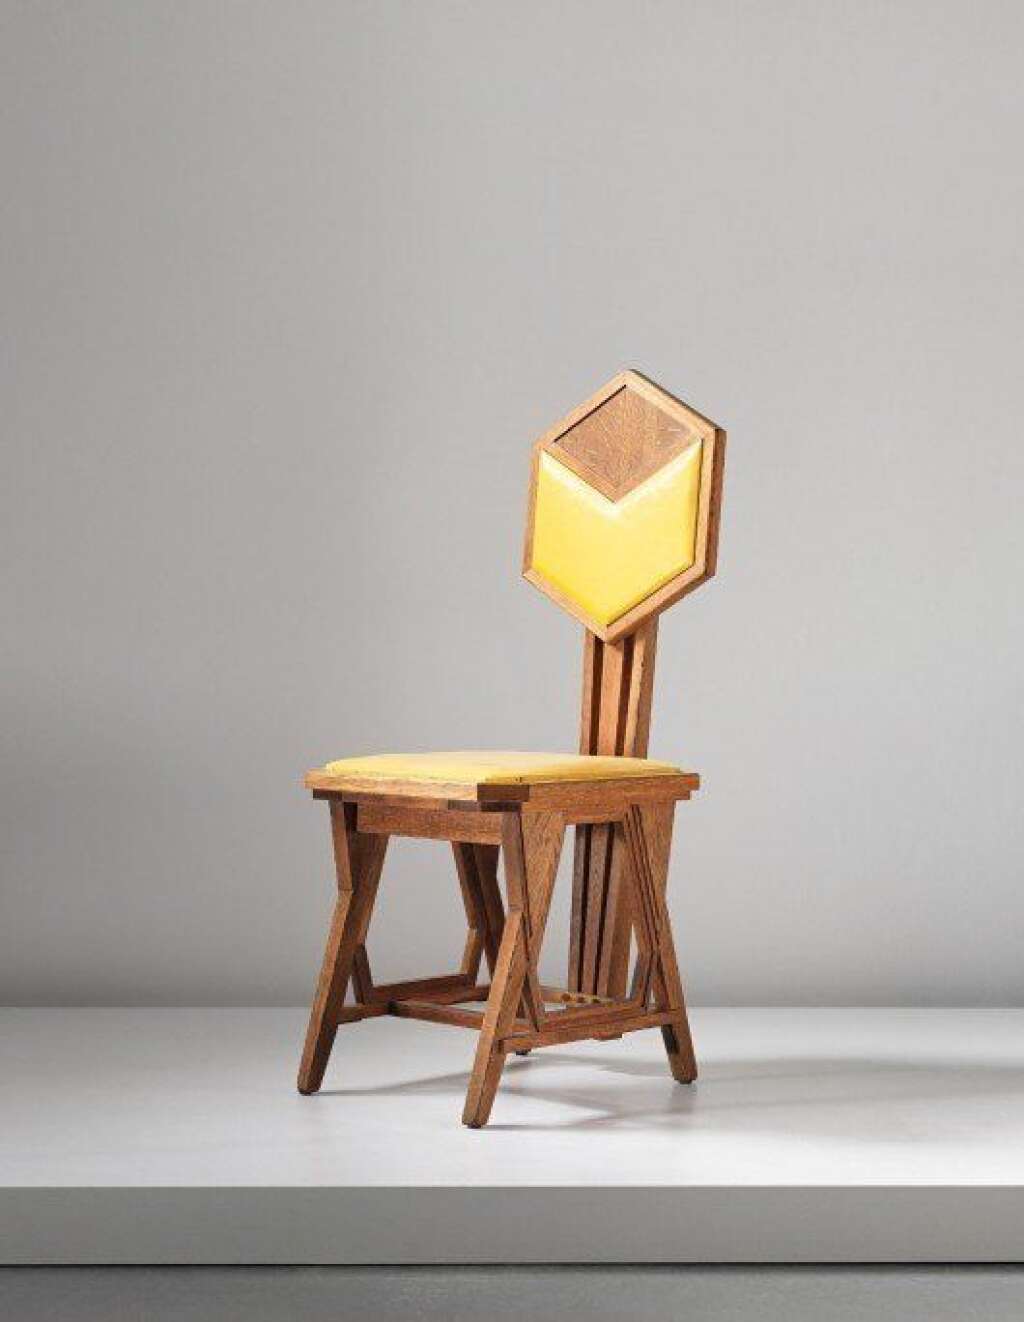 Frank Lloyd Wright : "Peacock chair" -